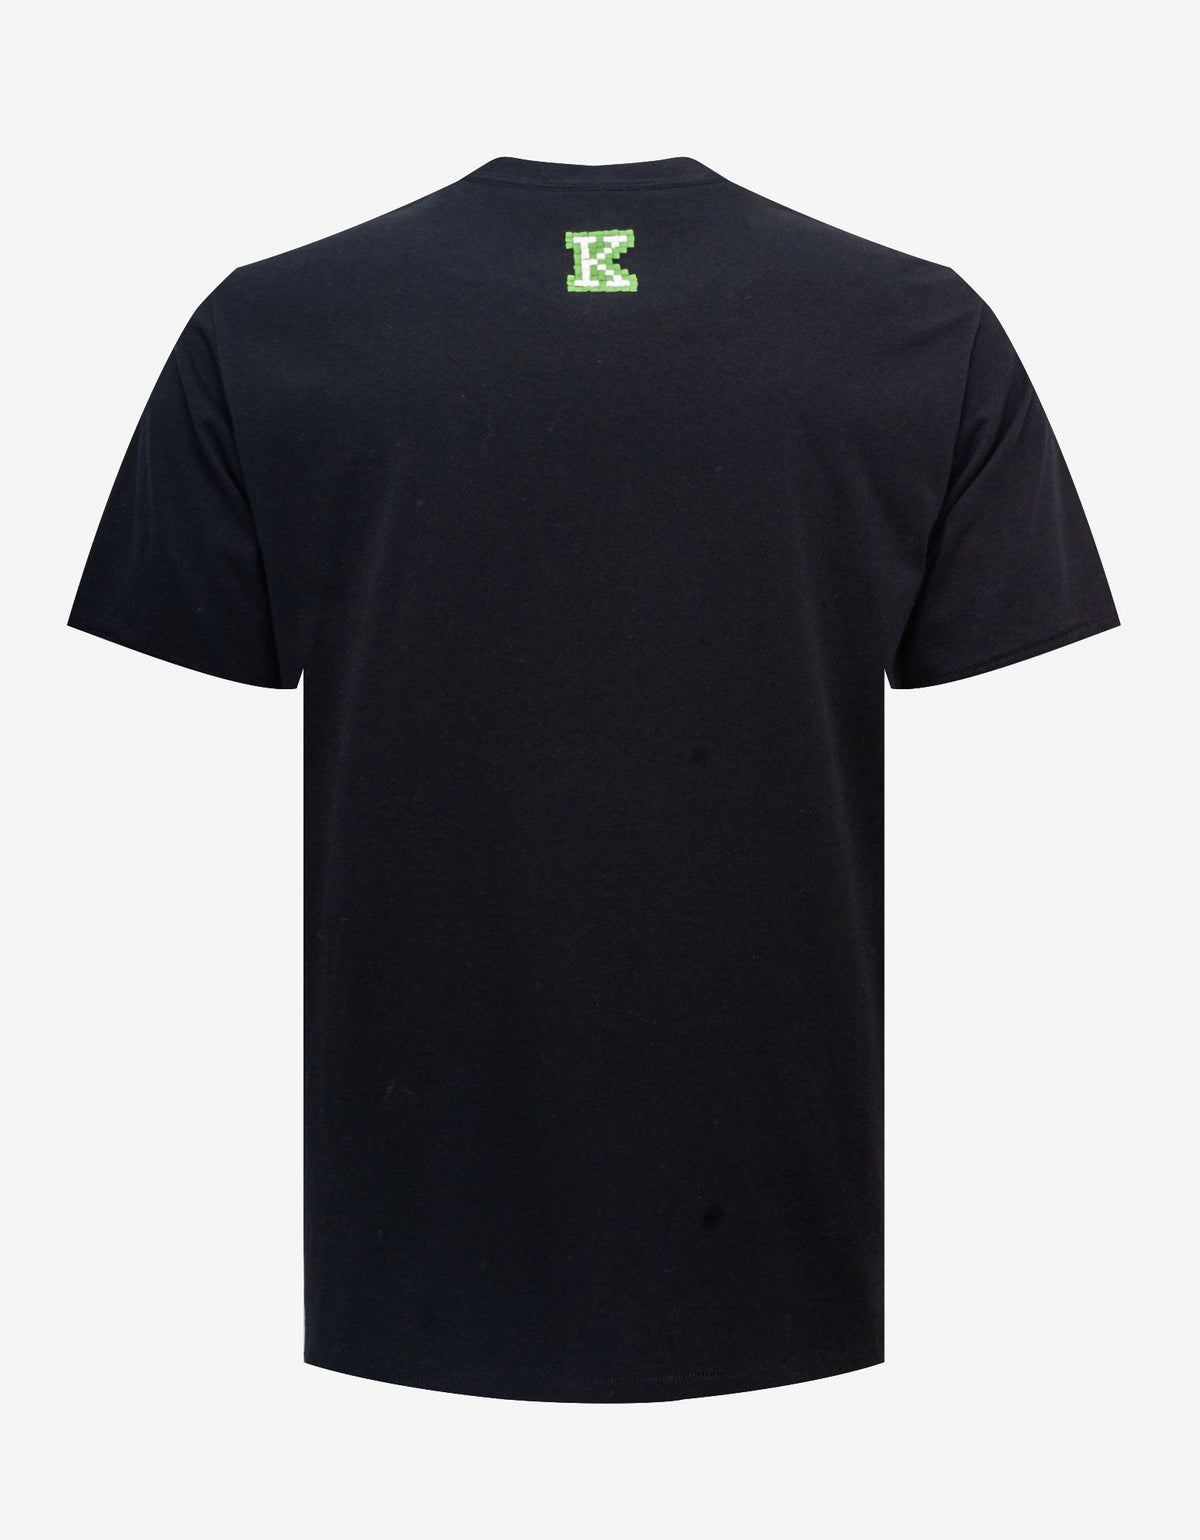 Kenzo Black 'Kenzo Pixels' Oversized T-Shirt